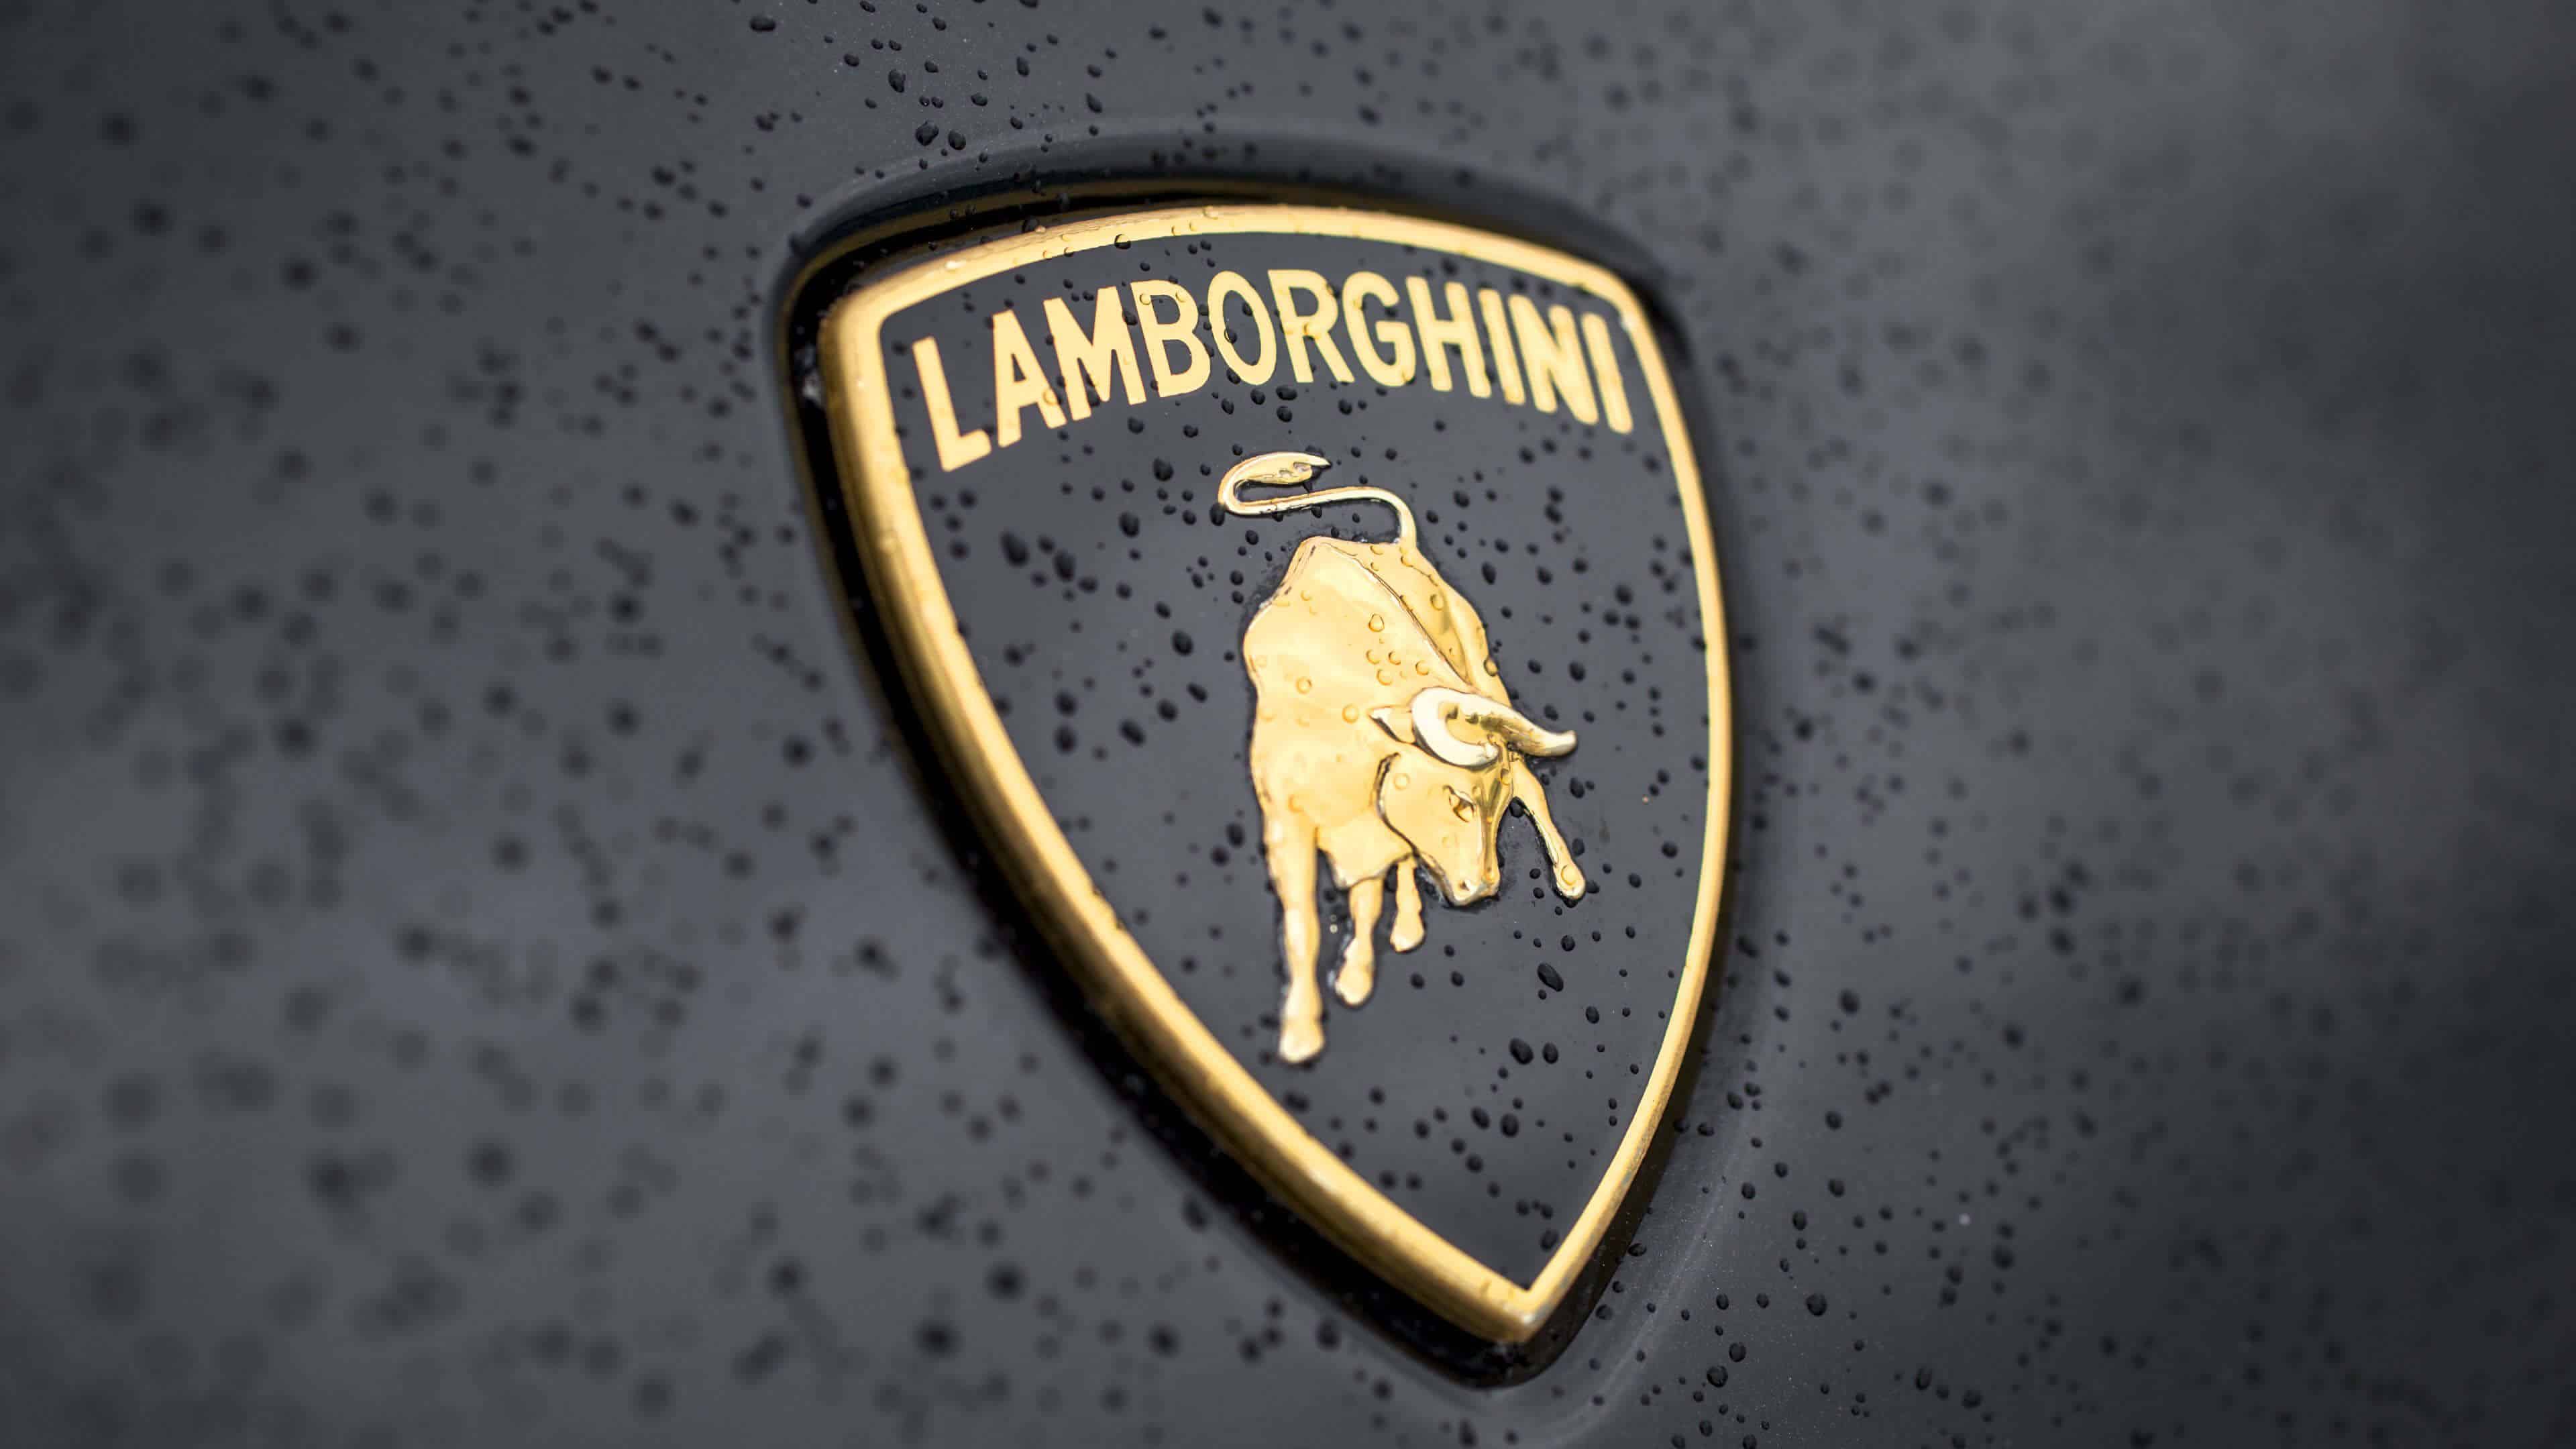 History of Lamborghini Sports cars